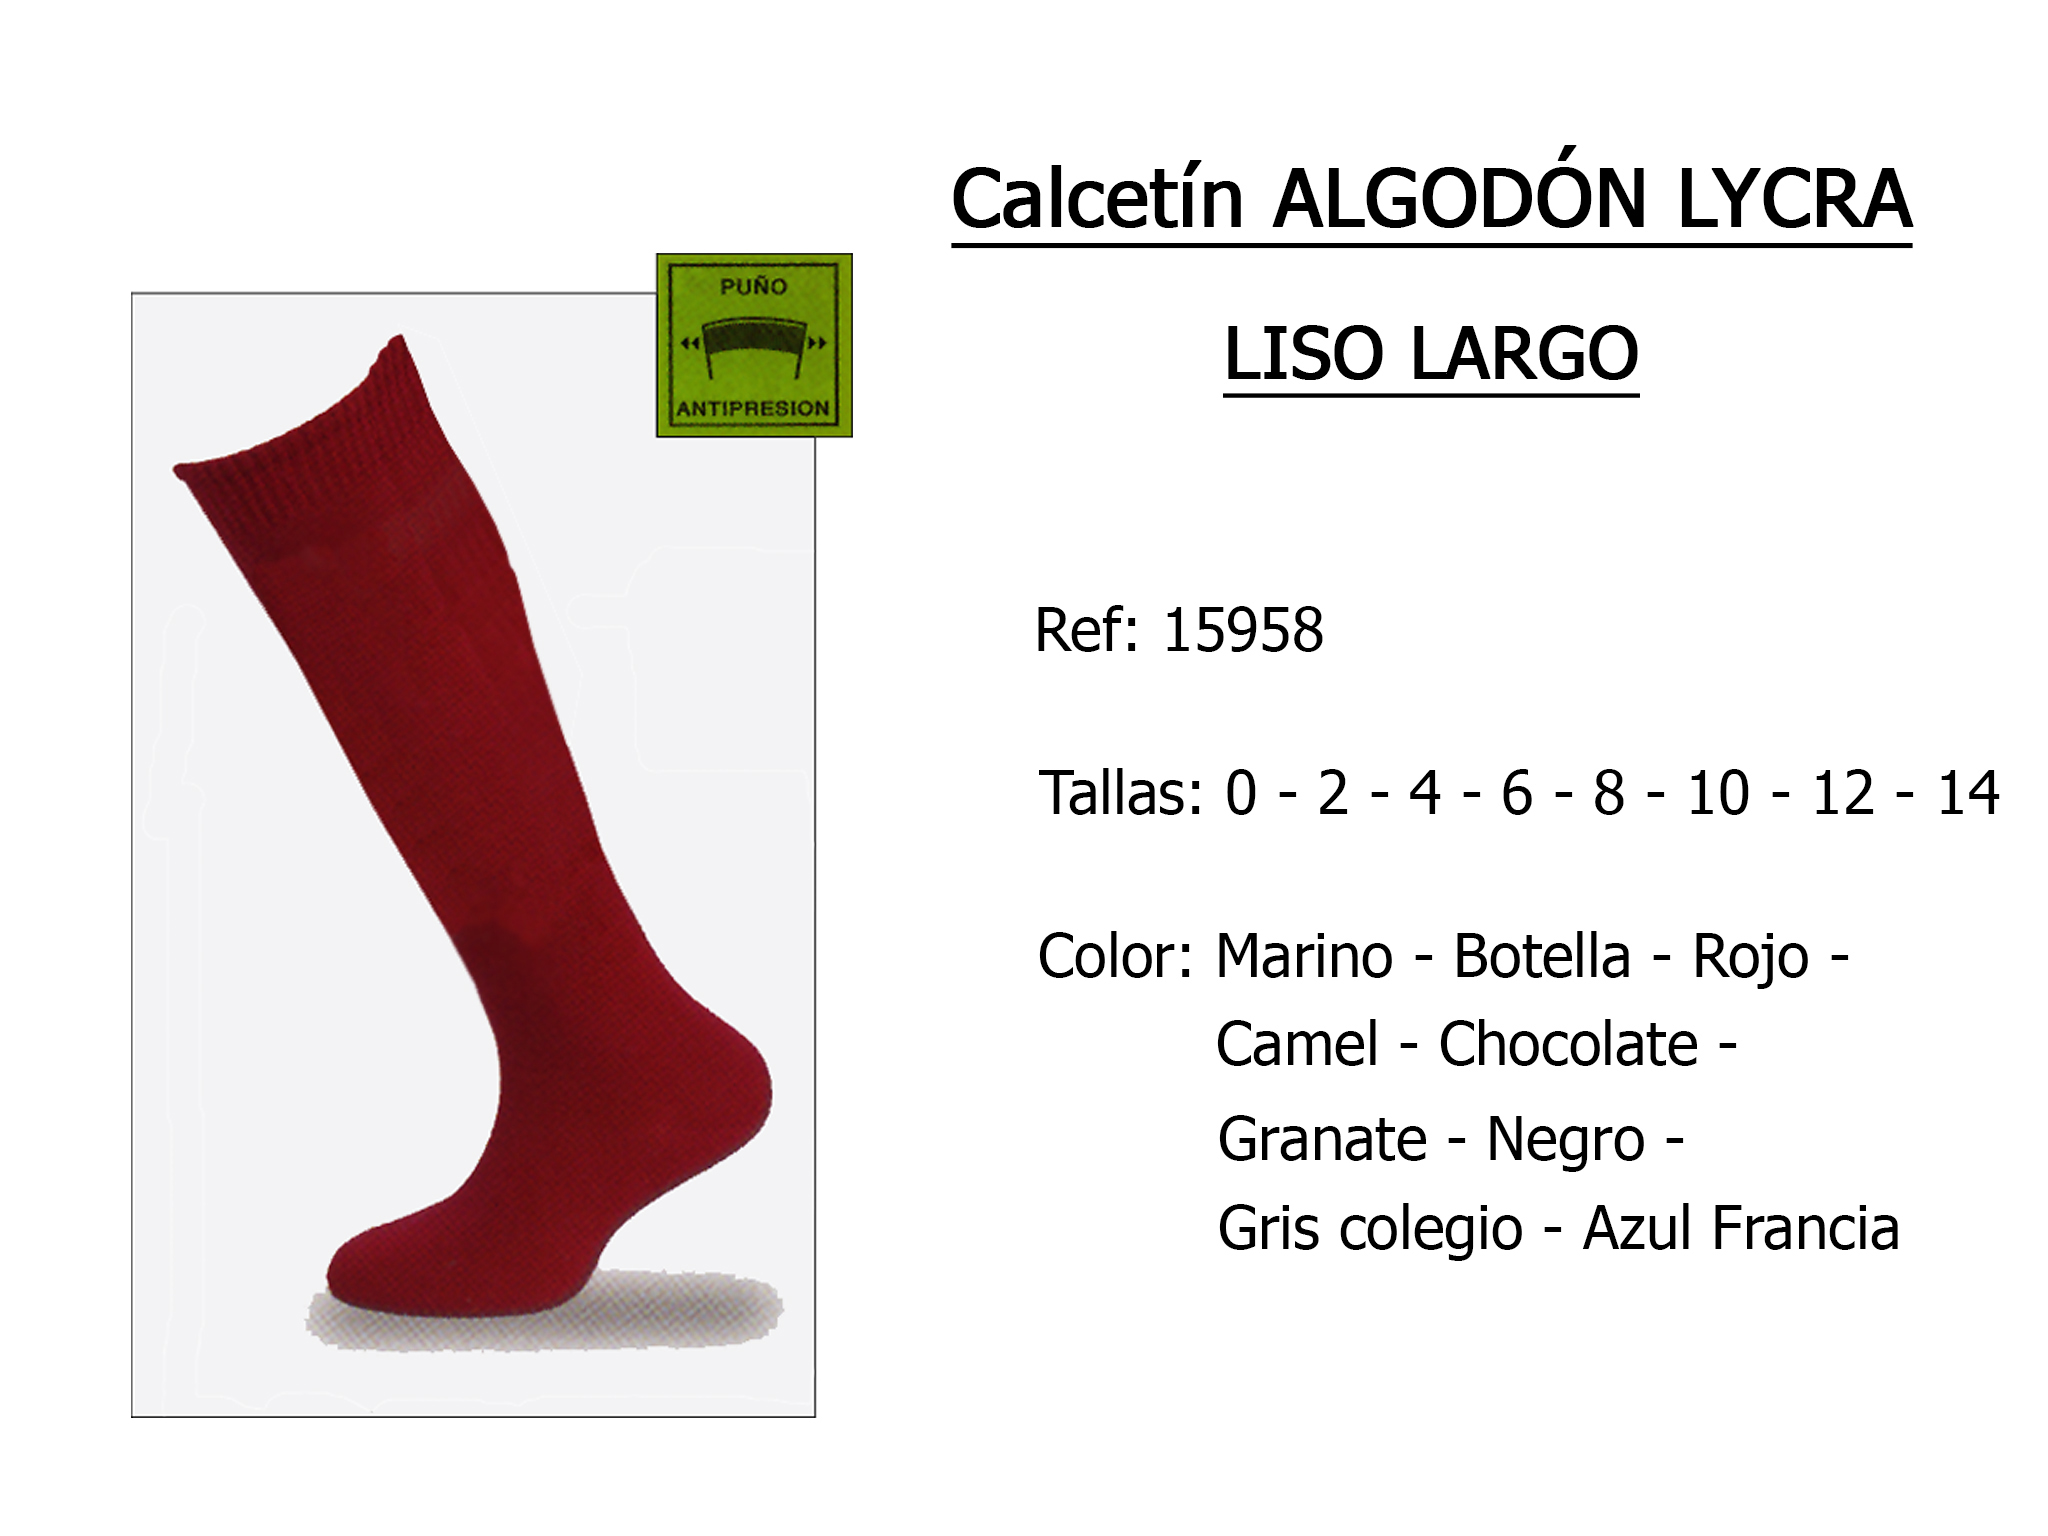 CALCETIN algodon lycra liso largo 15958